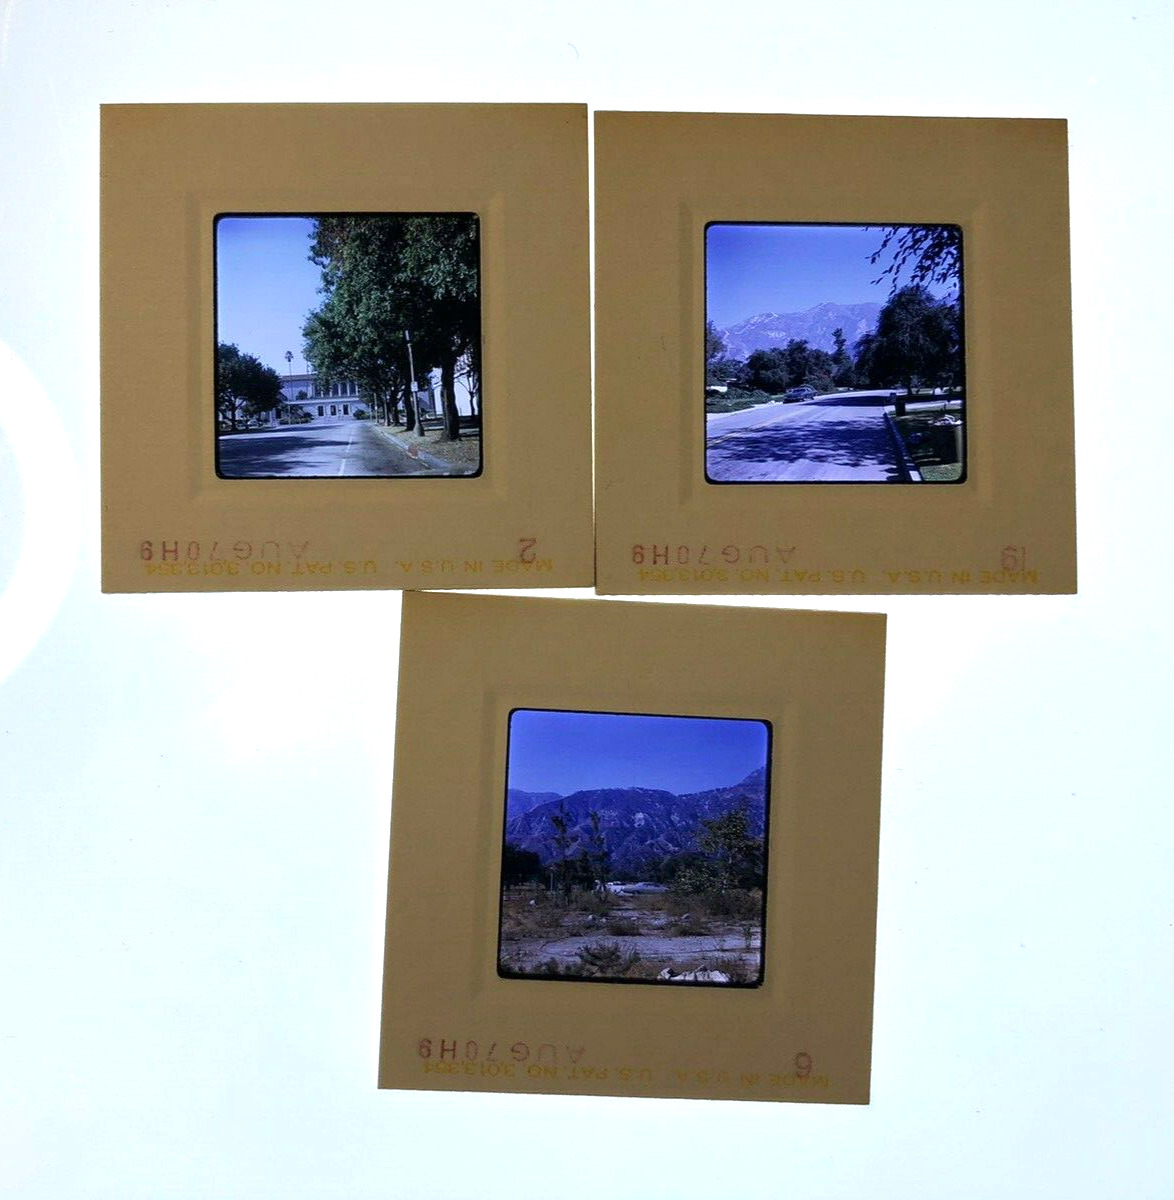 Lot of 3 Original 35mm Slides - Pasadena, CA - 1970 - Kodak